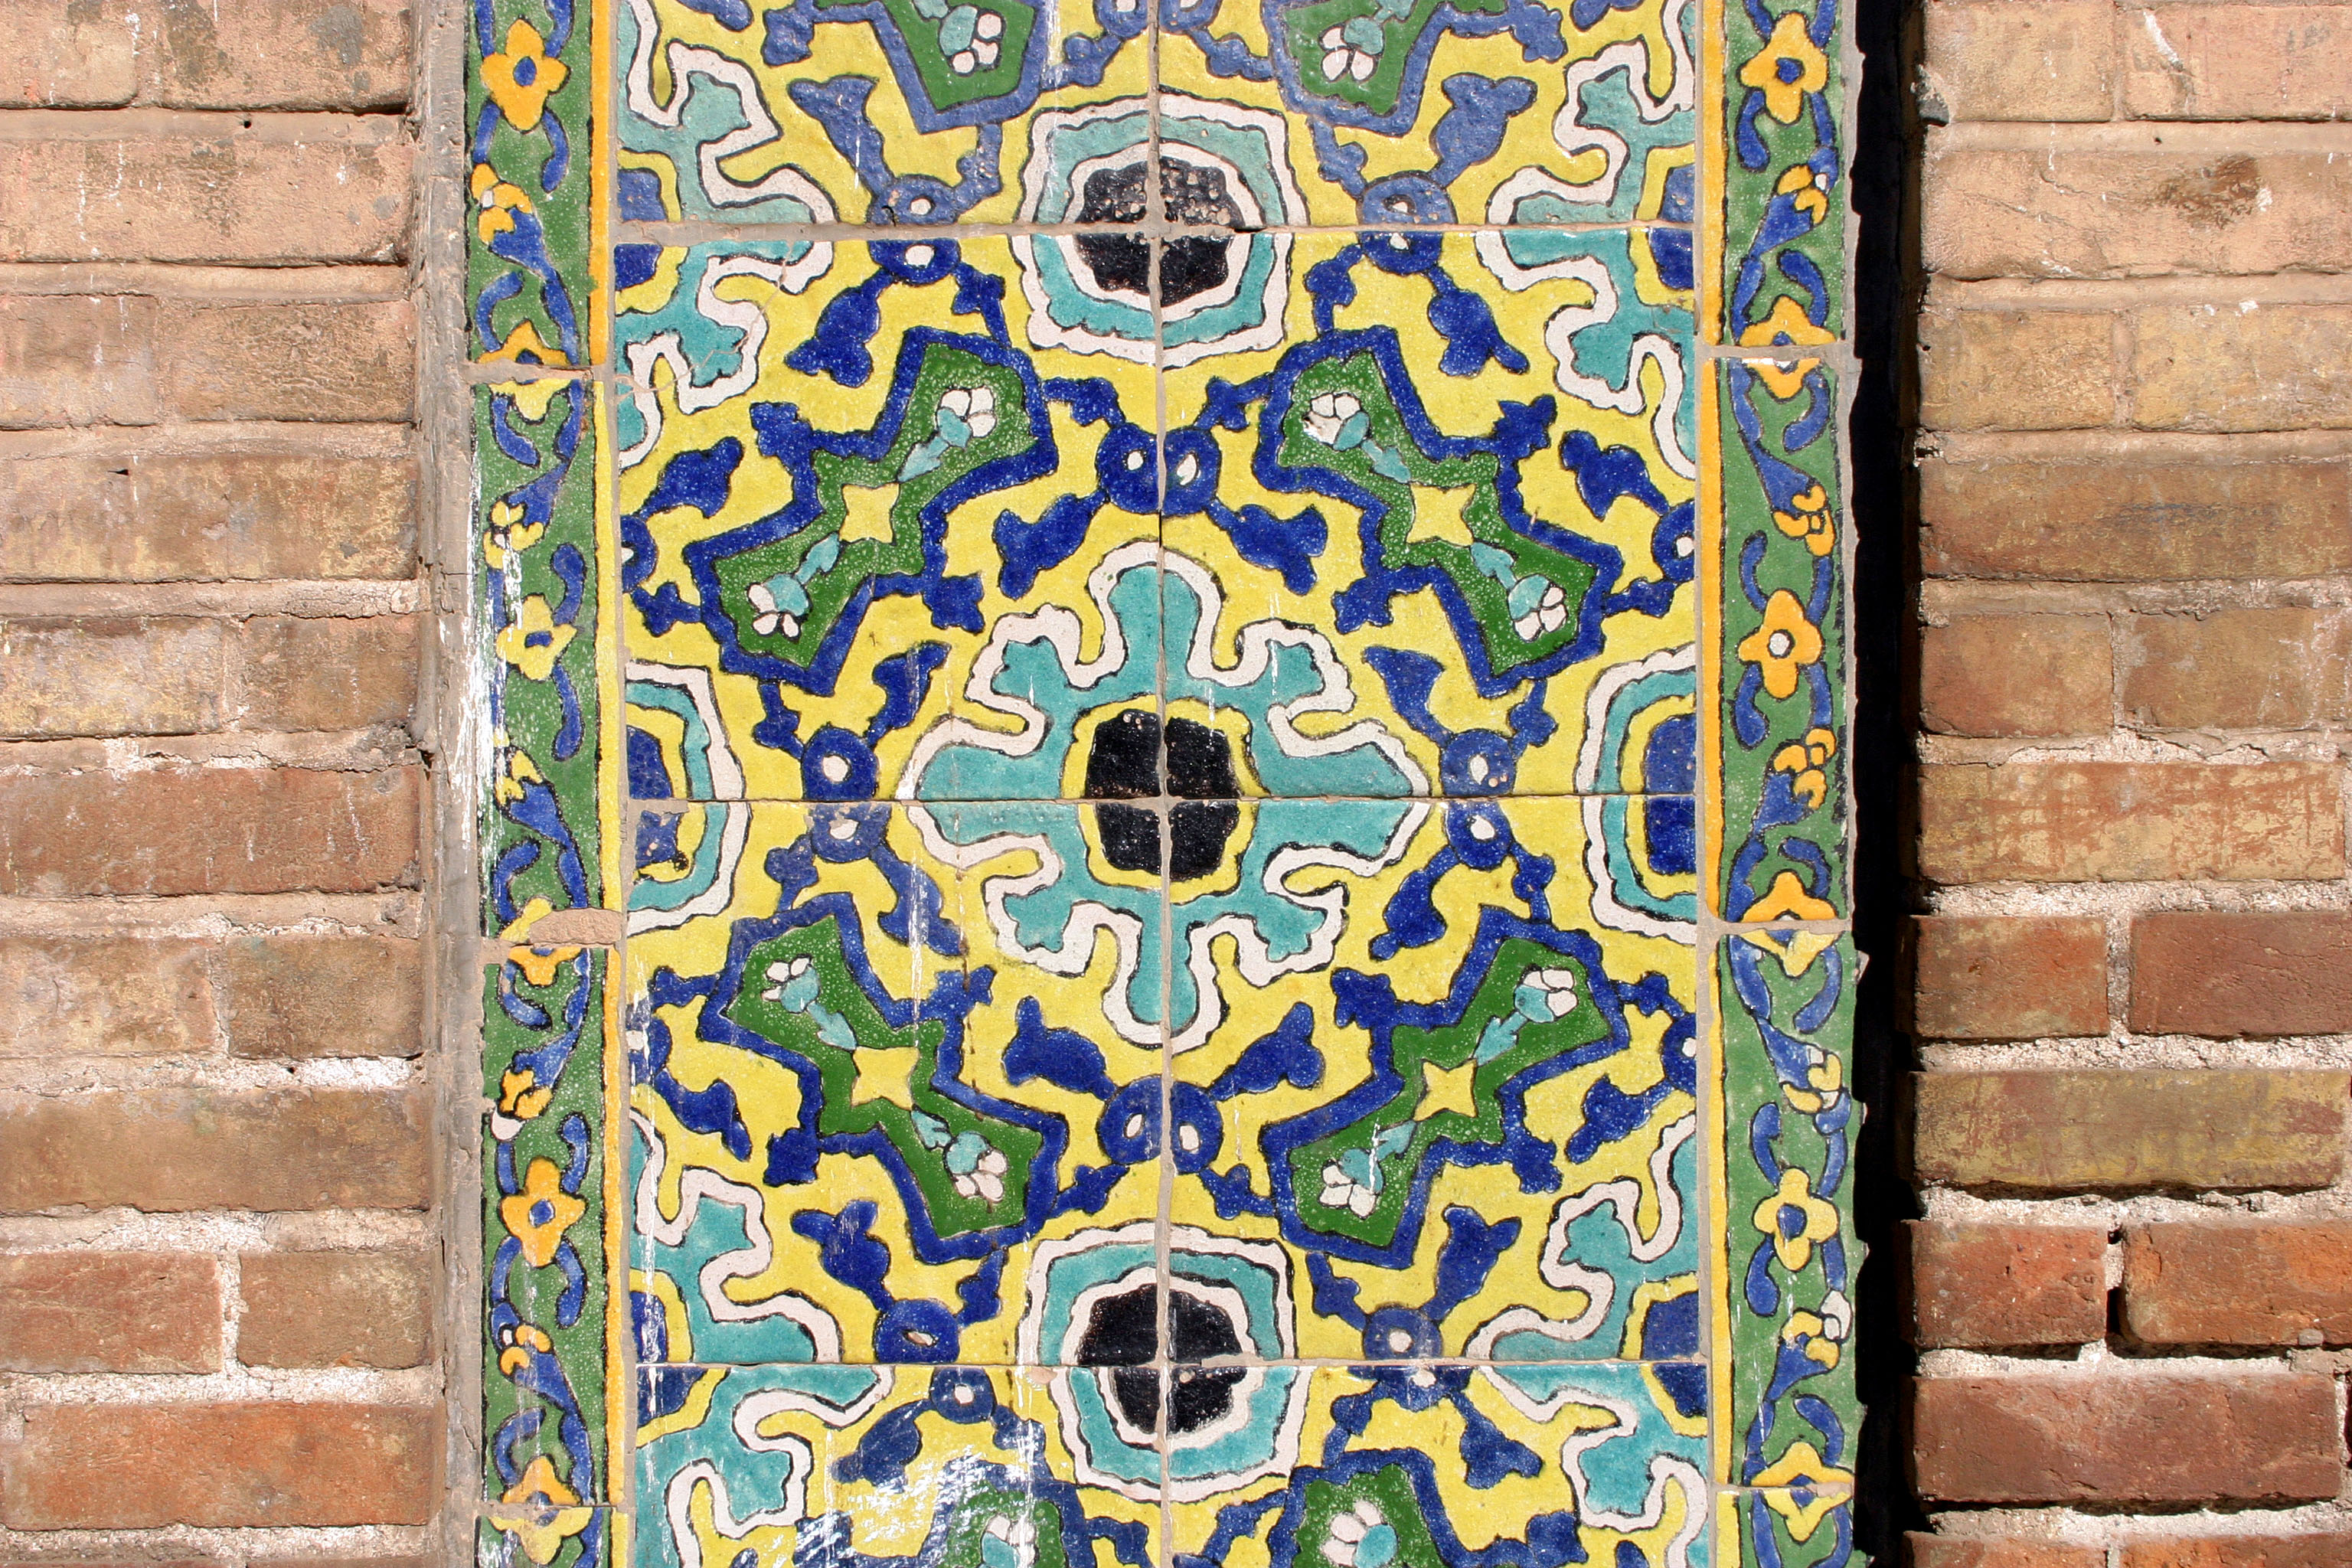 Qazvin Jameh Mosque'decoration 